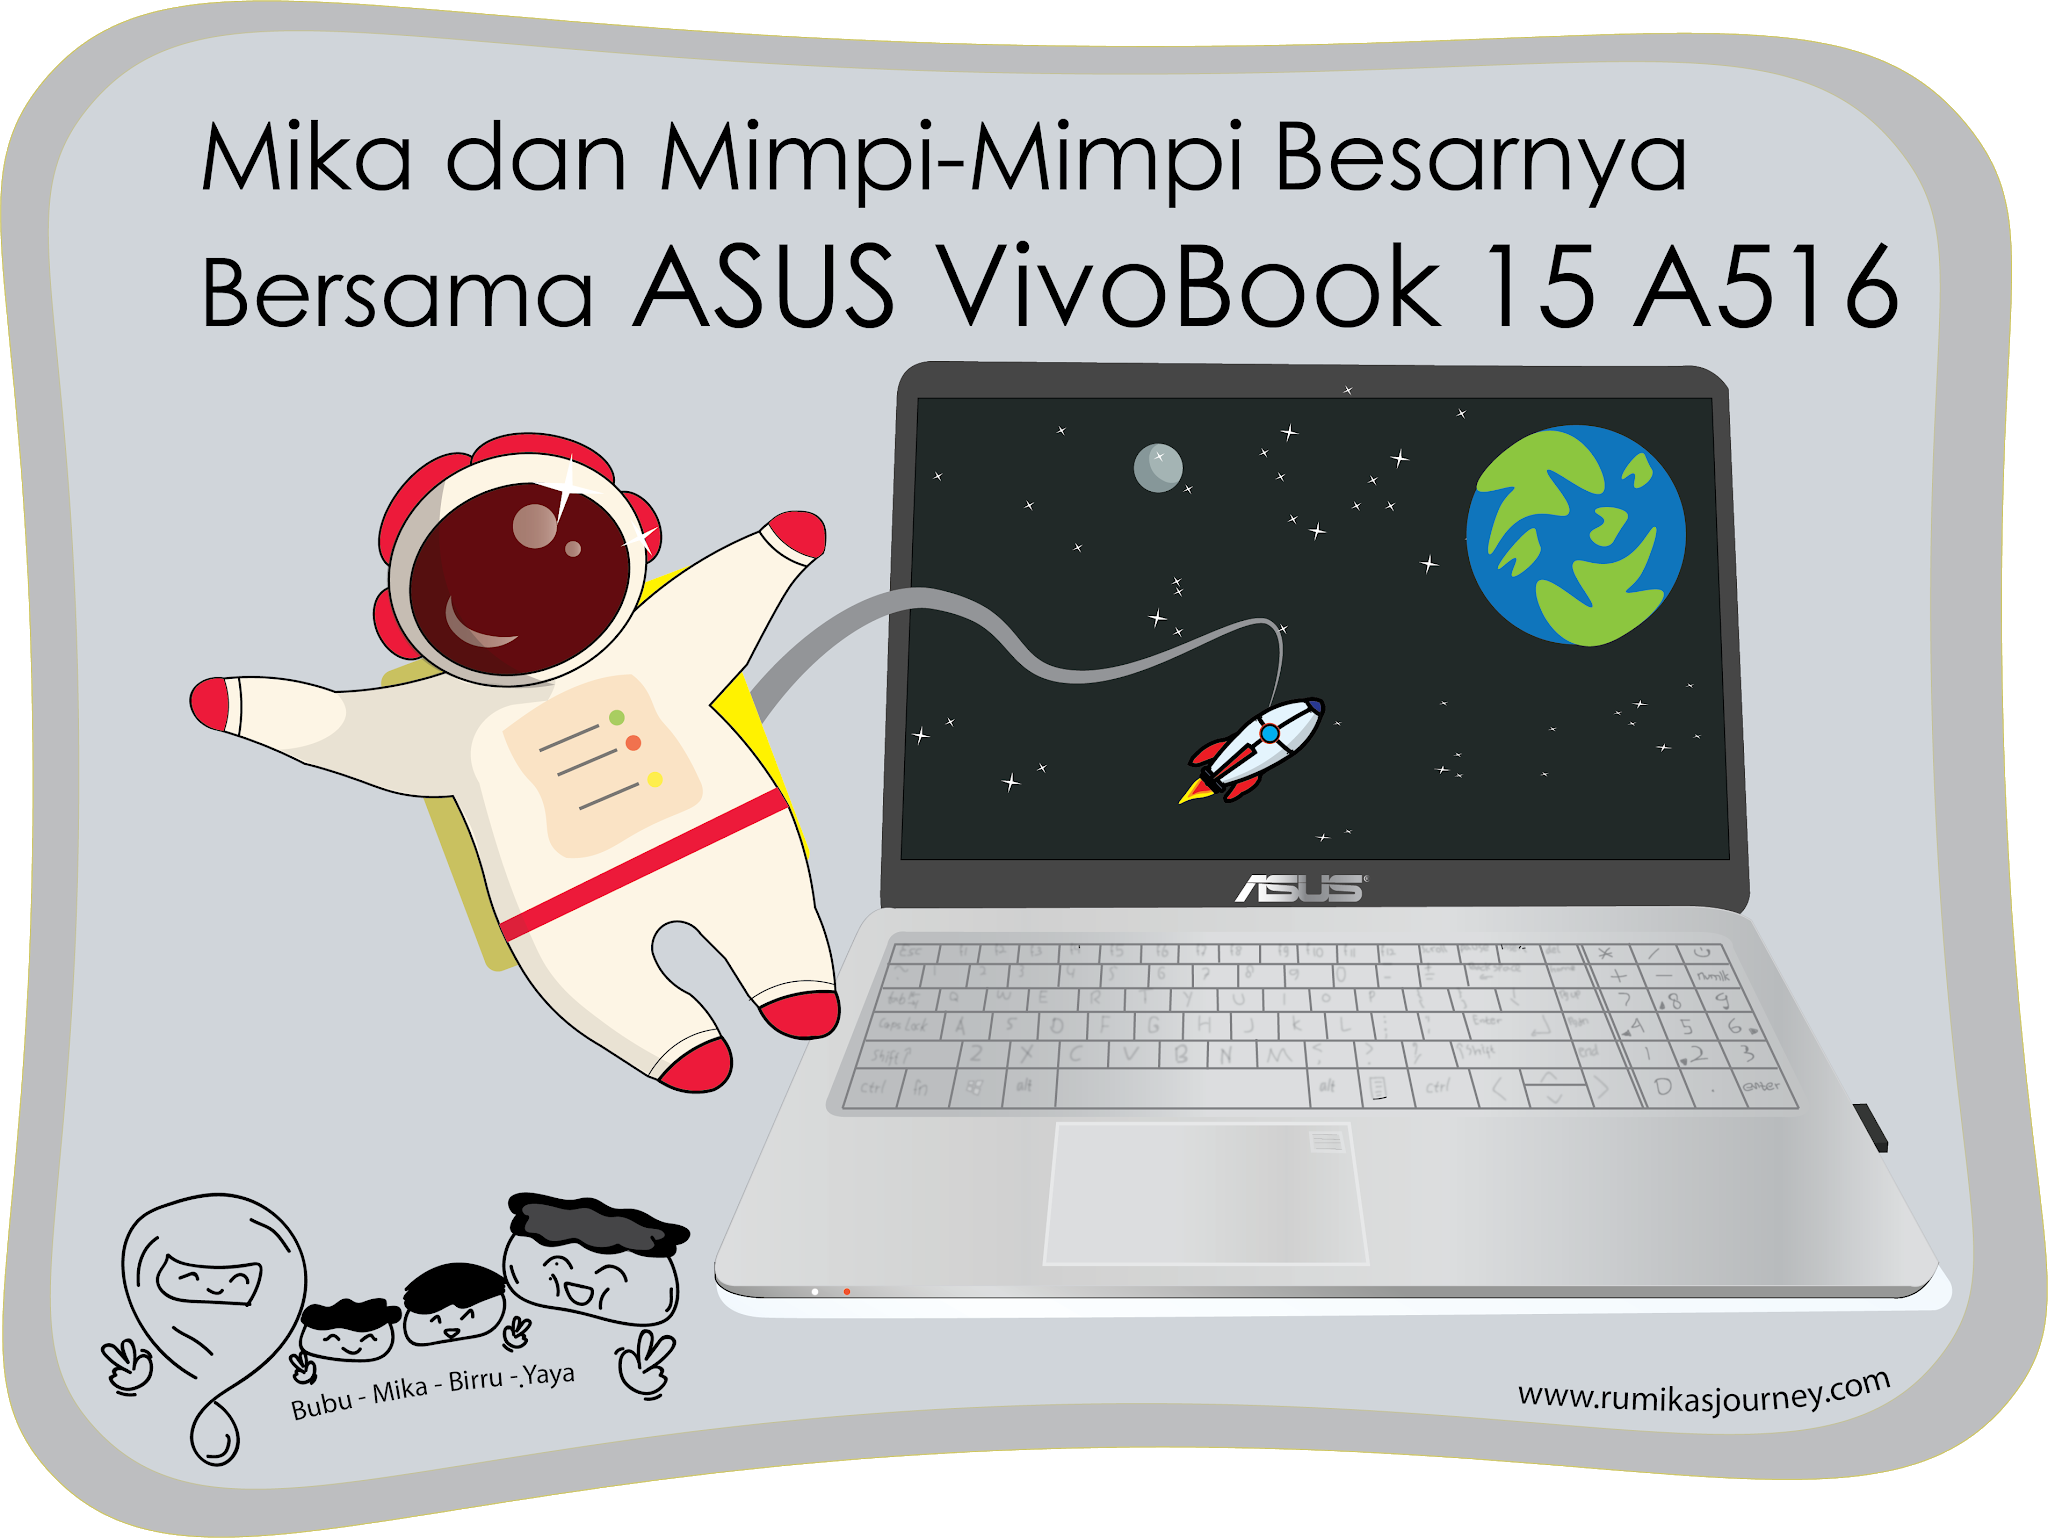 Asus vivobook 15 a516